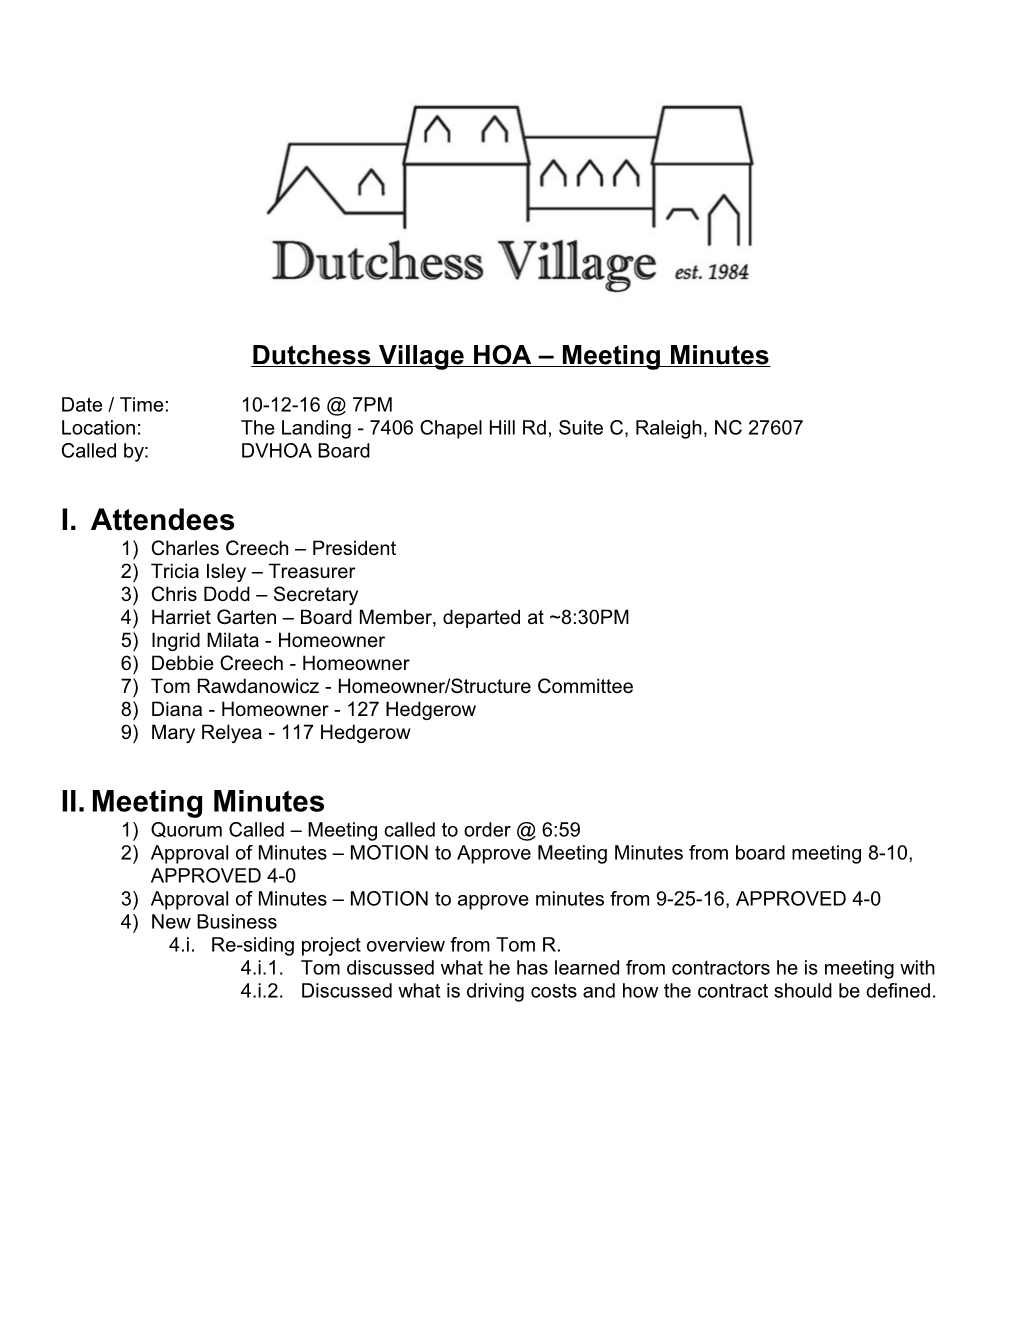 Dutchess Village HOA Meeting Minutes